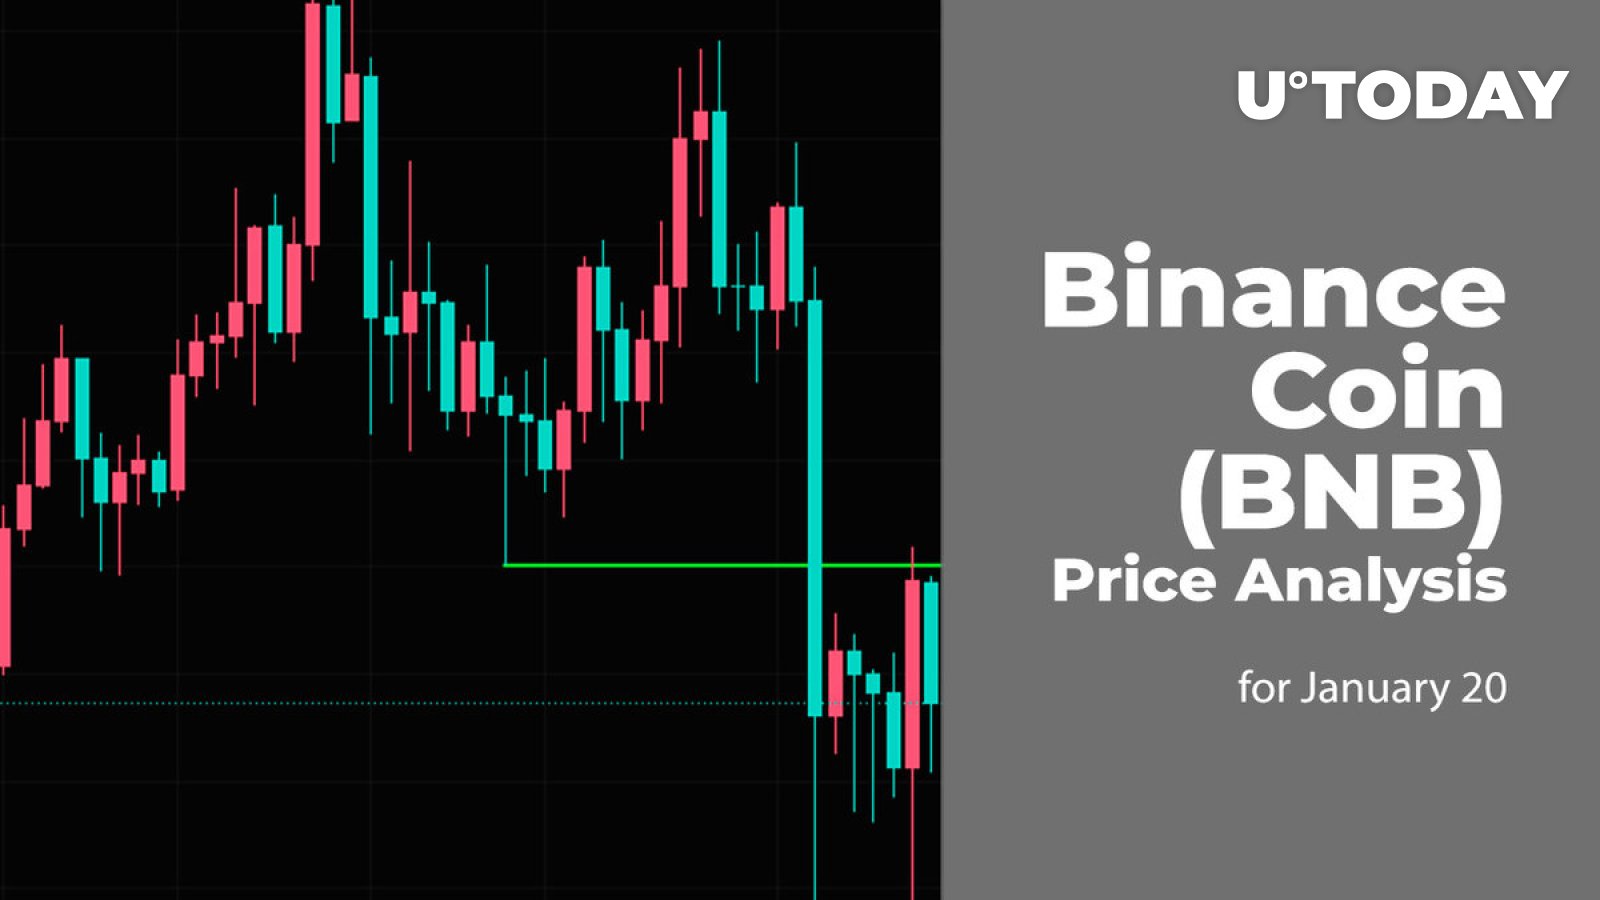 Binance Coin (BNB) Price Analysis for January 20